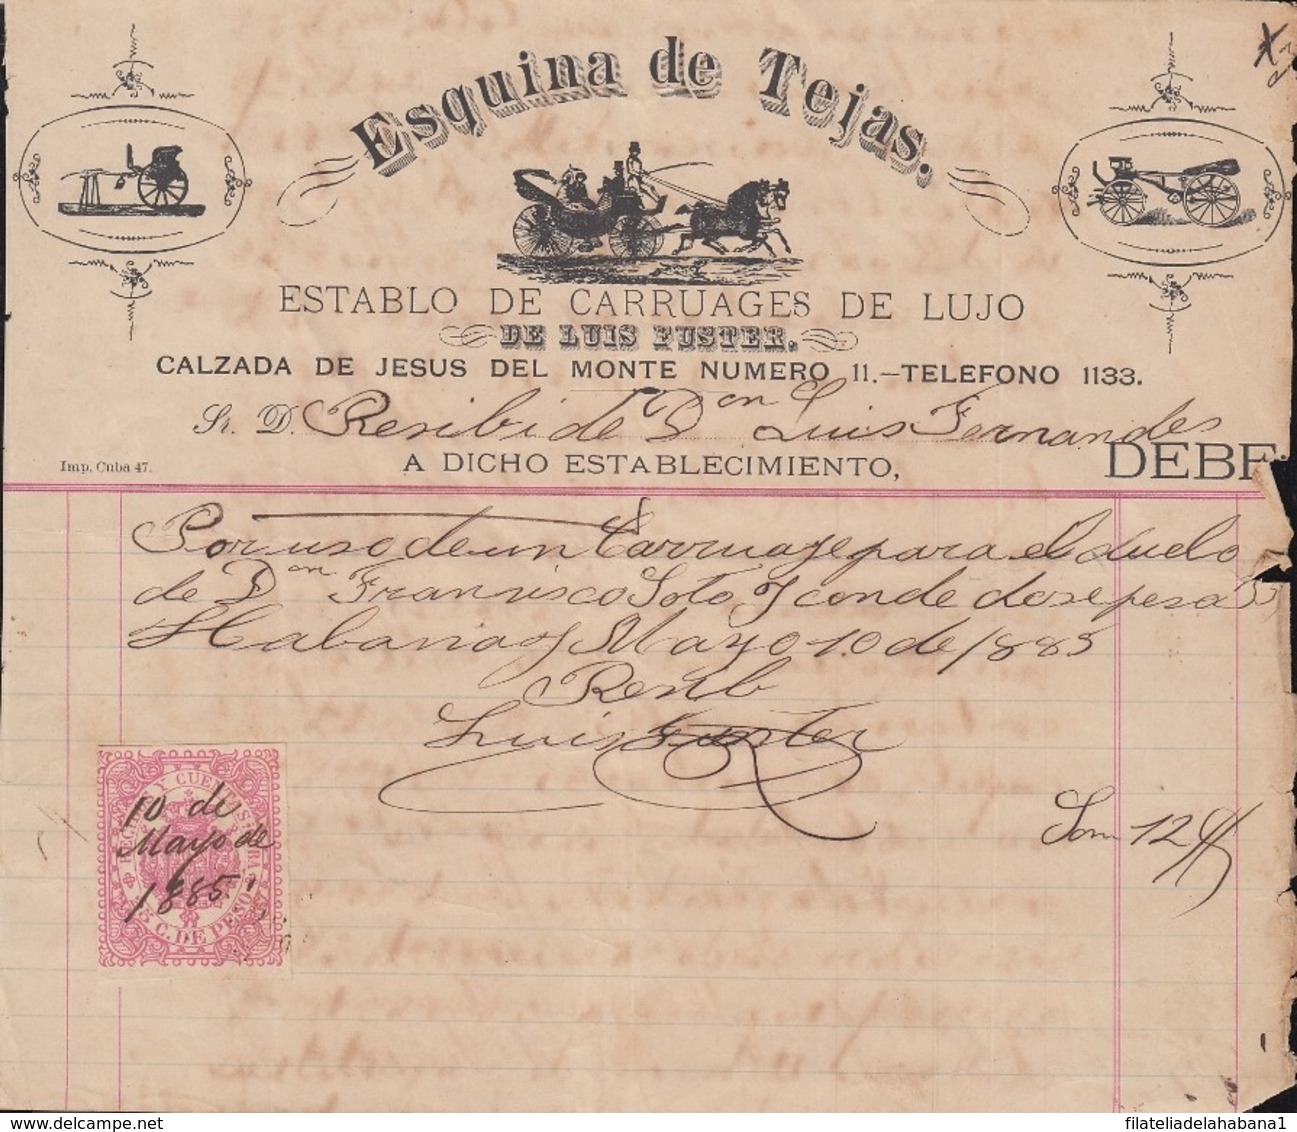 REC-135 CUBA SPAIN ESPAÑA (LG1643) RECIBOS REVENUE 1885. CARRUAJES DE LUJO CARRIAGE INVOICE. - Strafport